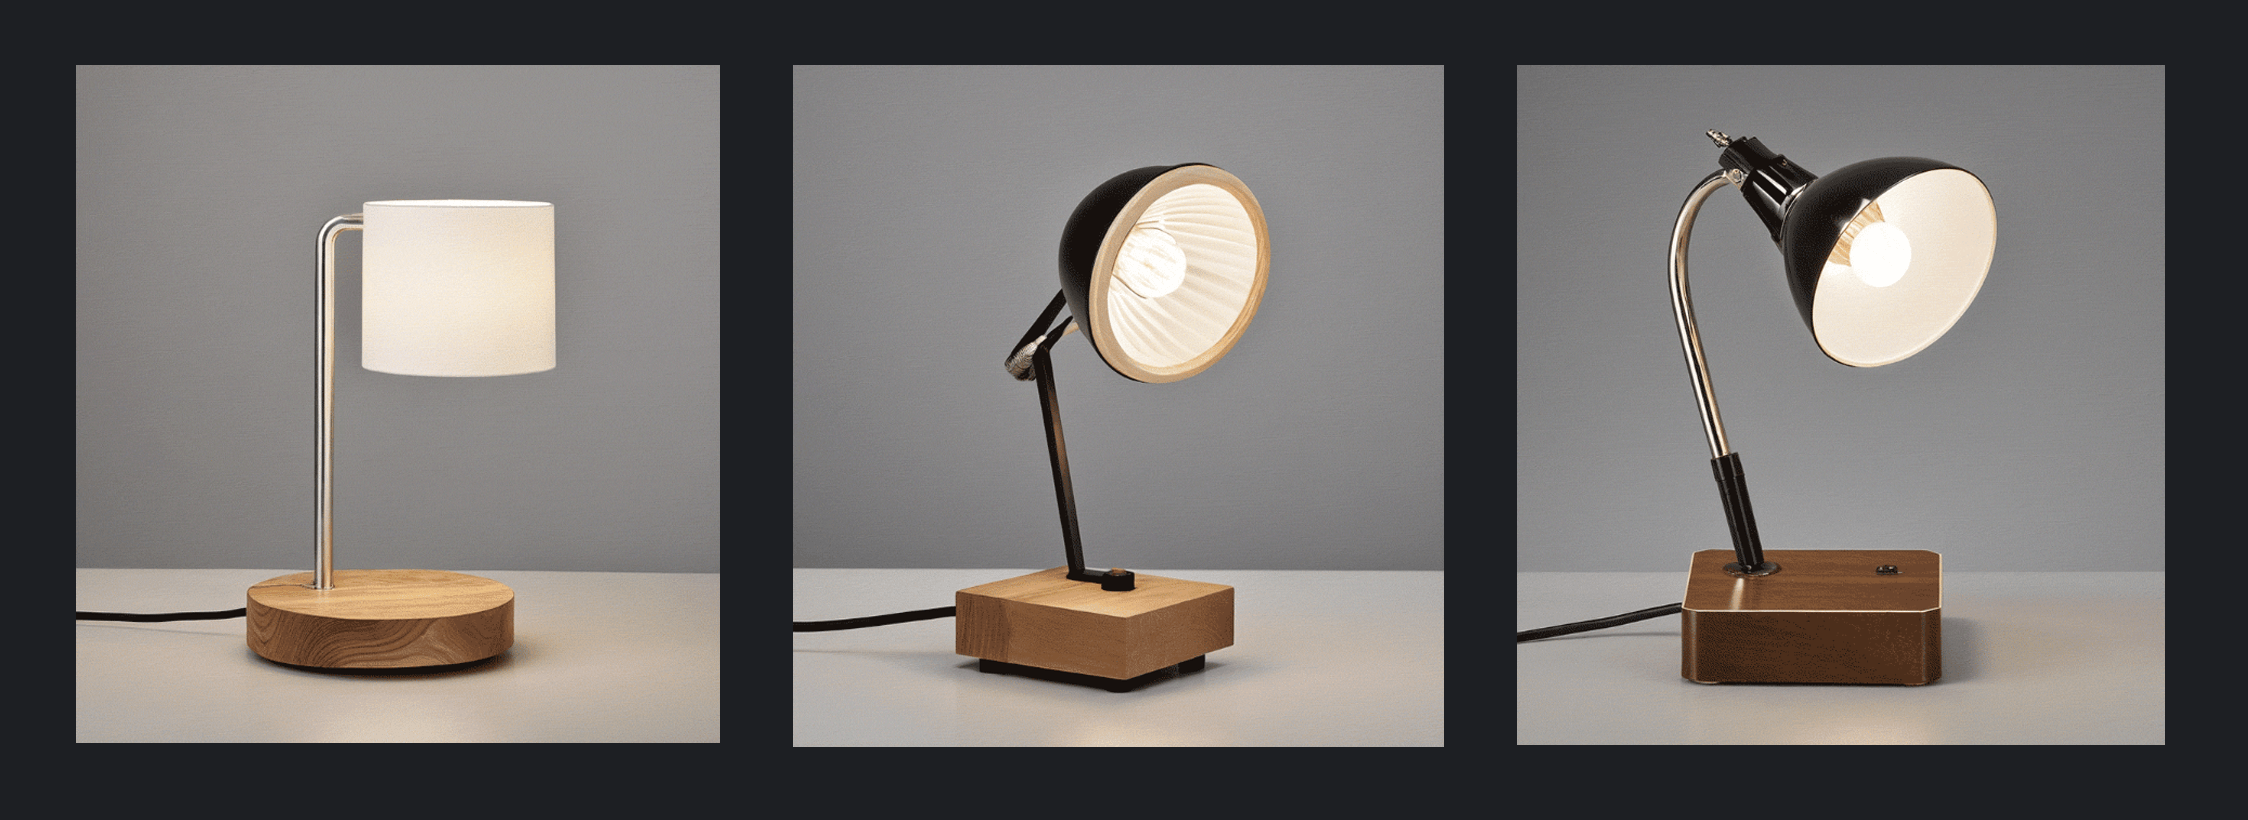 Разный дизайн ламп
